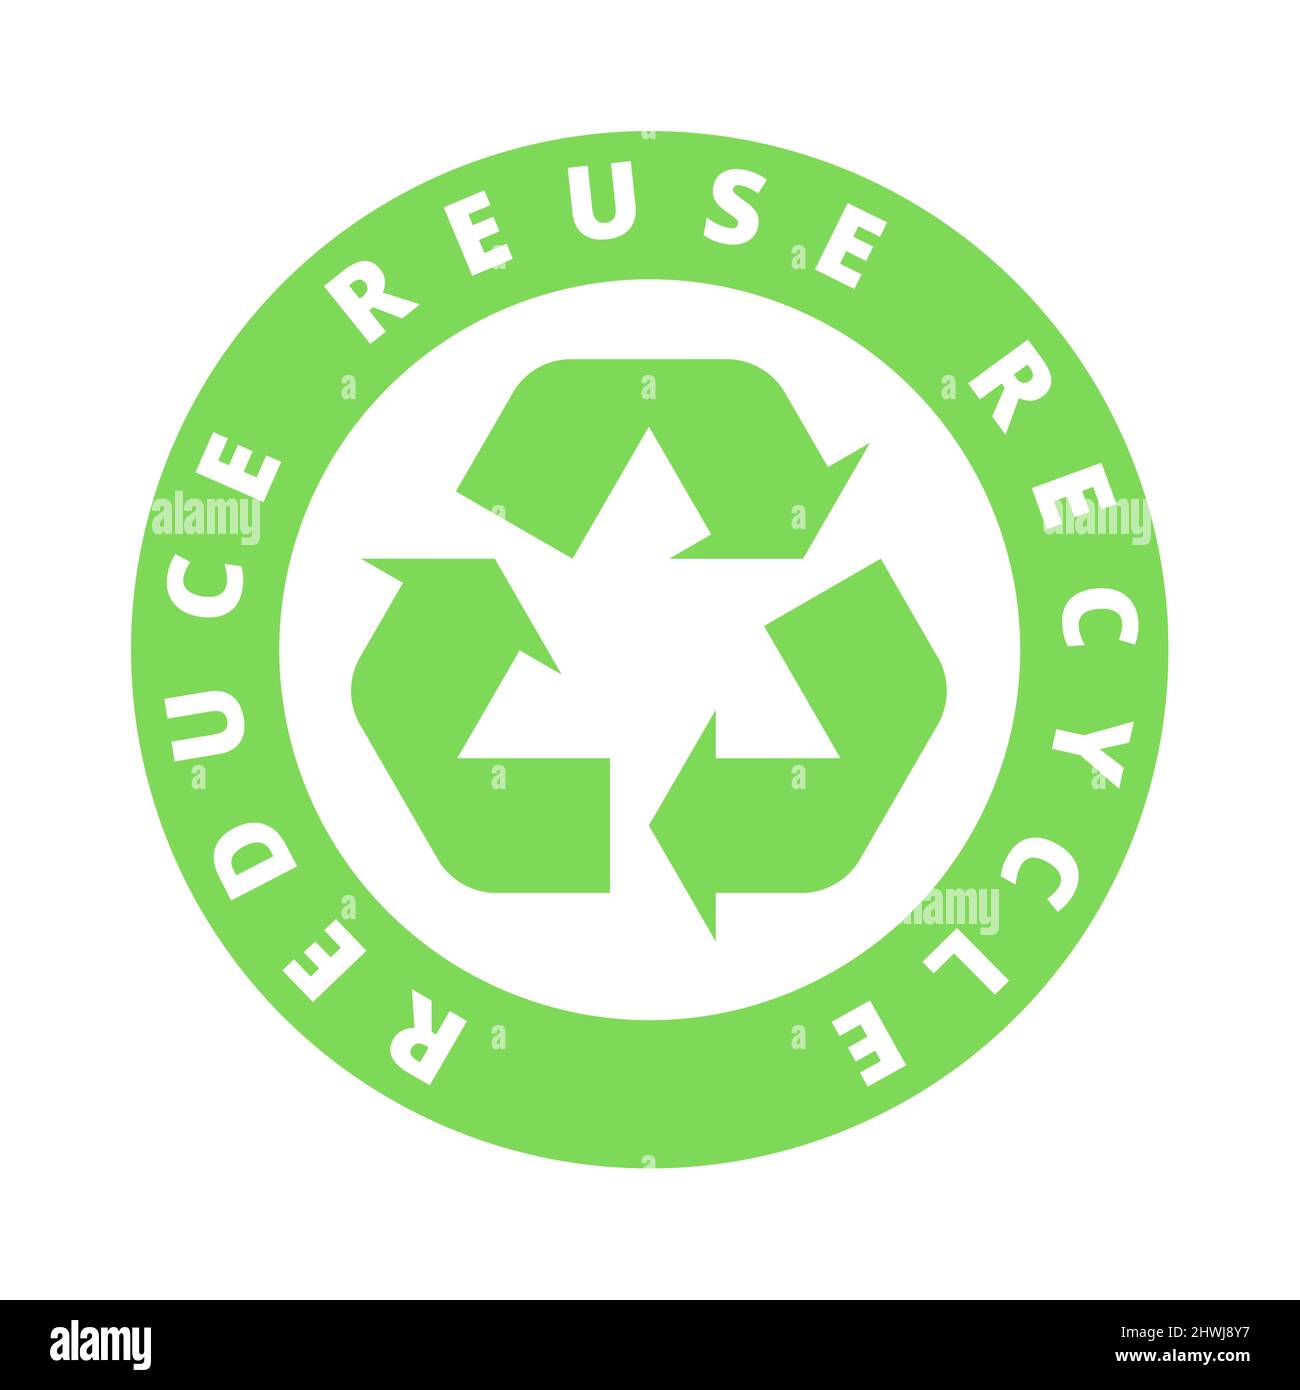 Reduce, reuse, recycle symbol icon Stock Photo